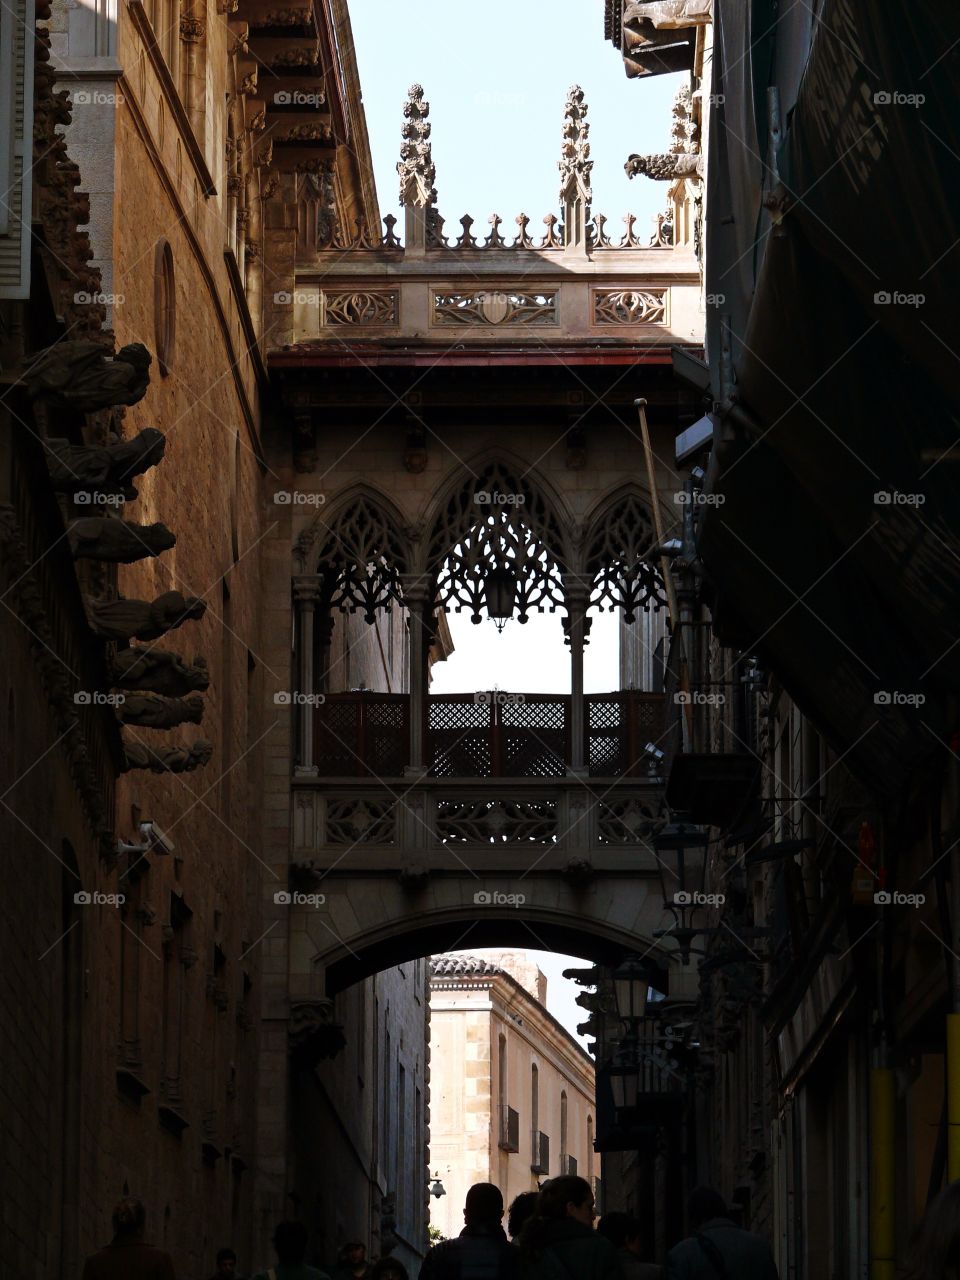 Exploring Barcelona's mysterious alleys